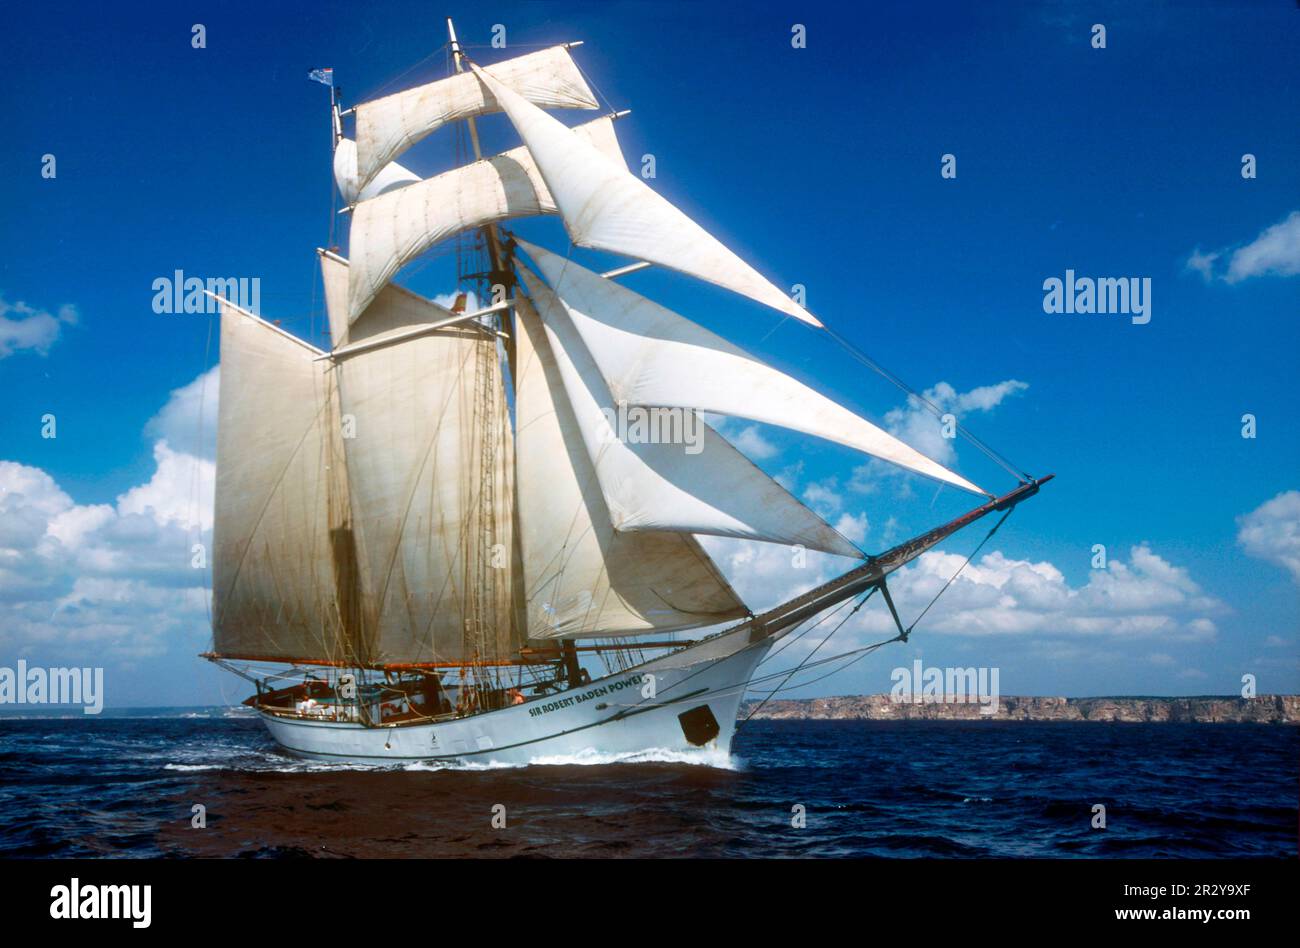 Topsail schooner, schooner, two-master, Sir Robert, diving cruise, sailing ship, Mediterranean, sailing, Baltimore Clipper, square-rigger Stock Photo